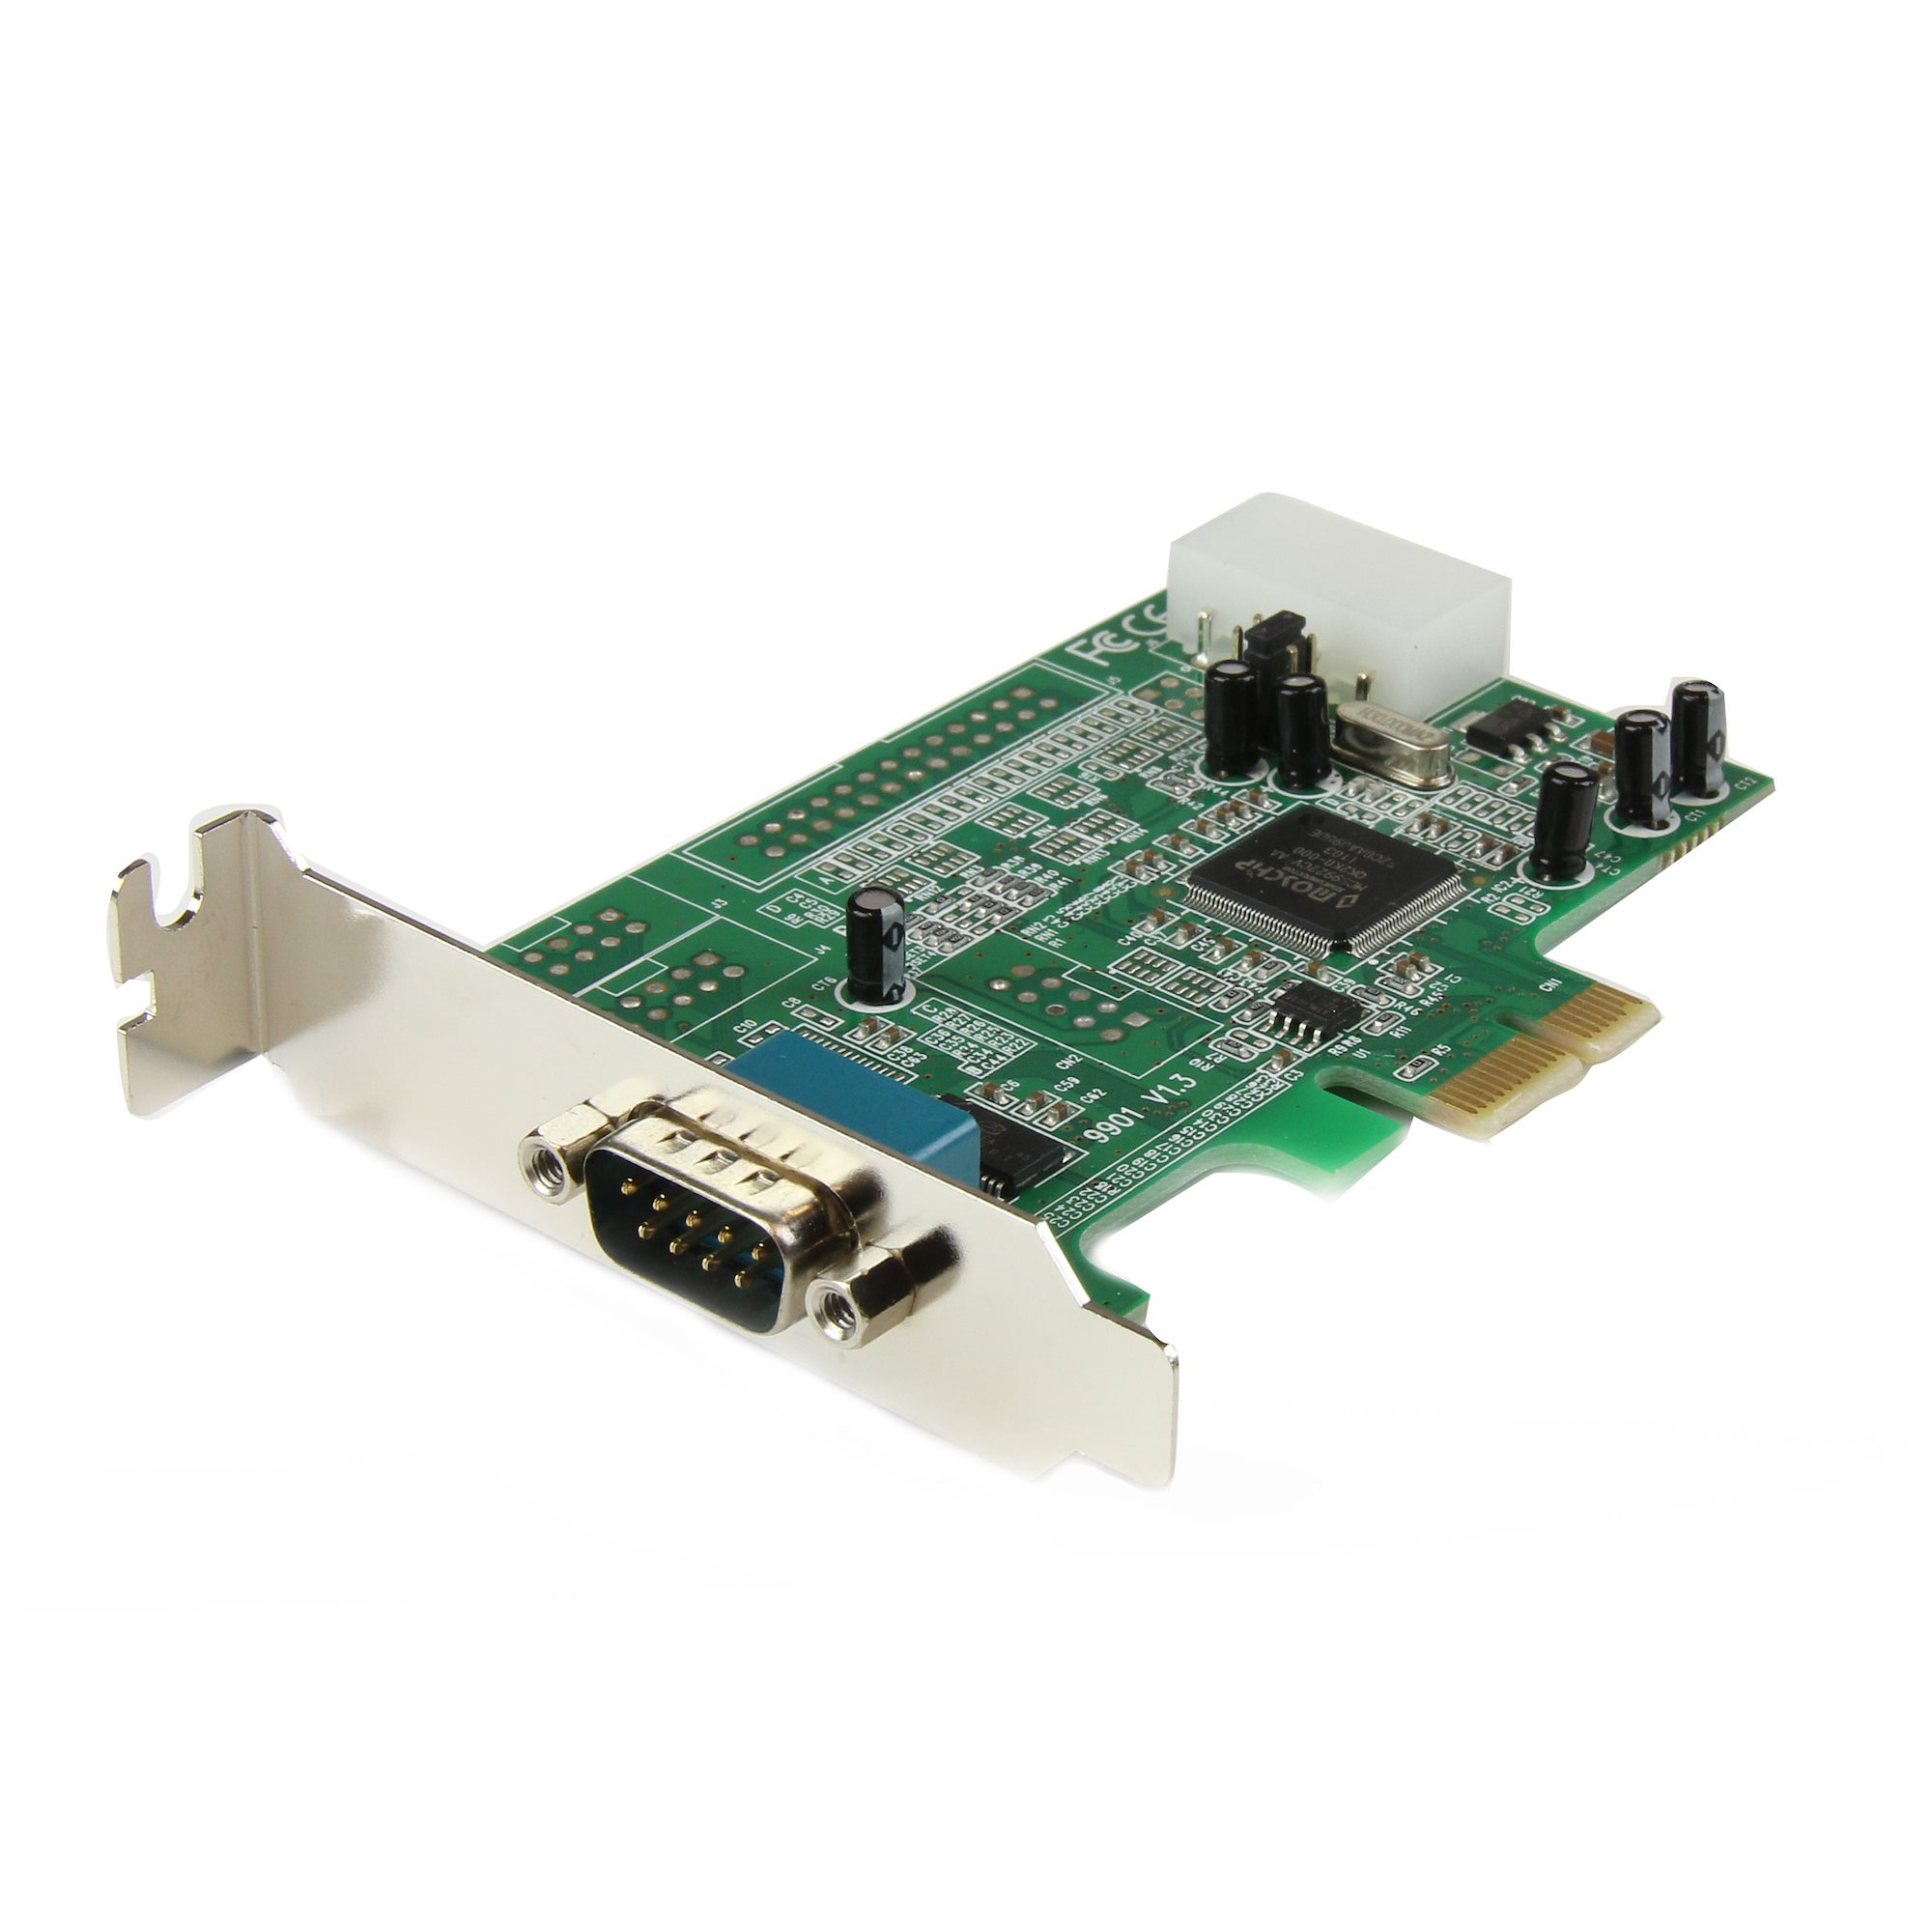 【PEX1S553LP】PCI EXPRESS SERIAL CARD